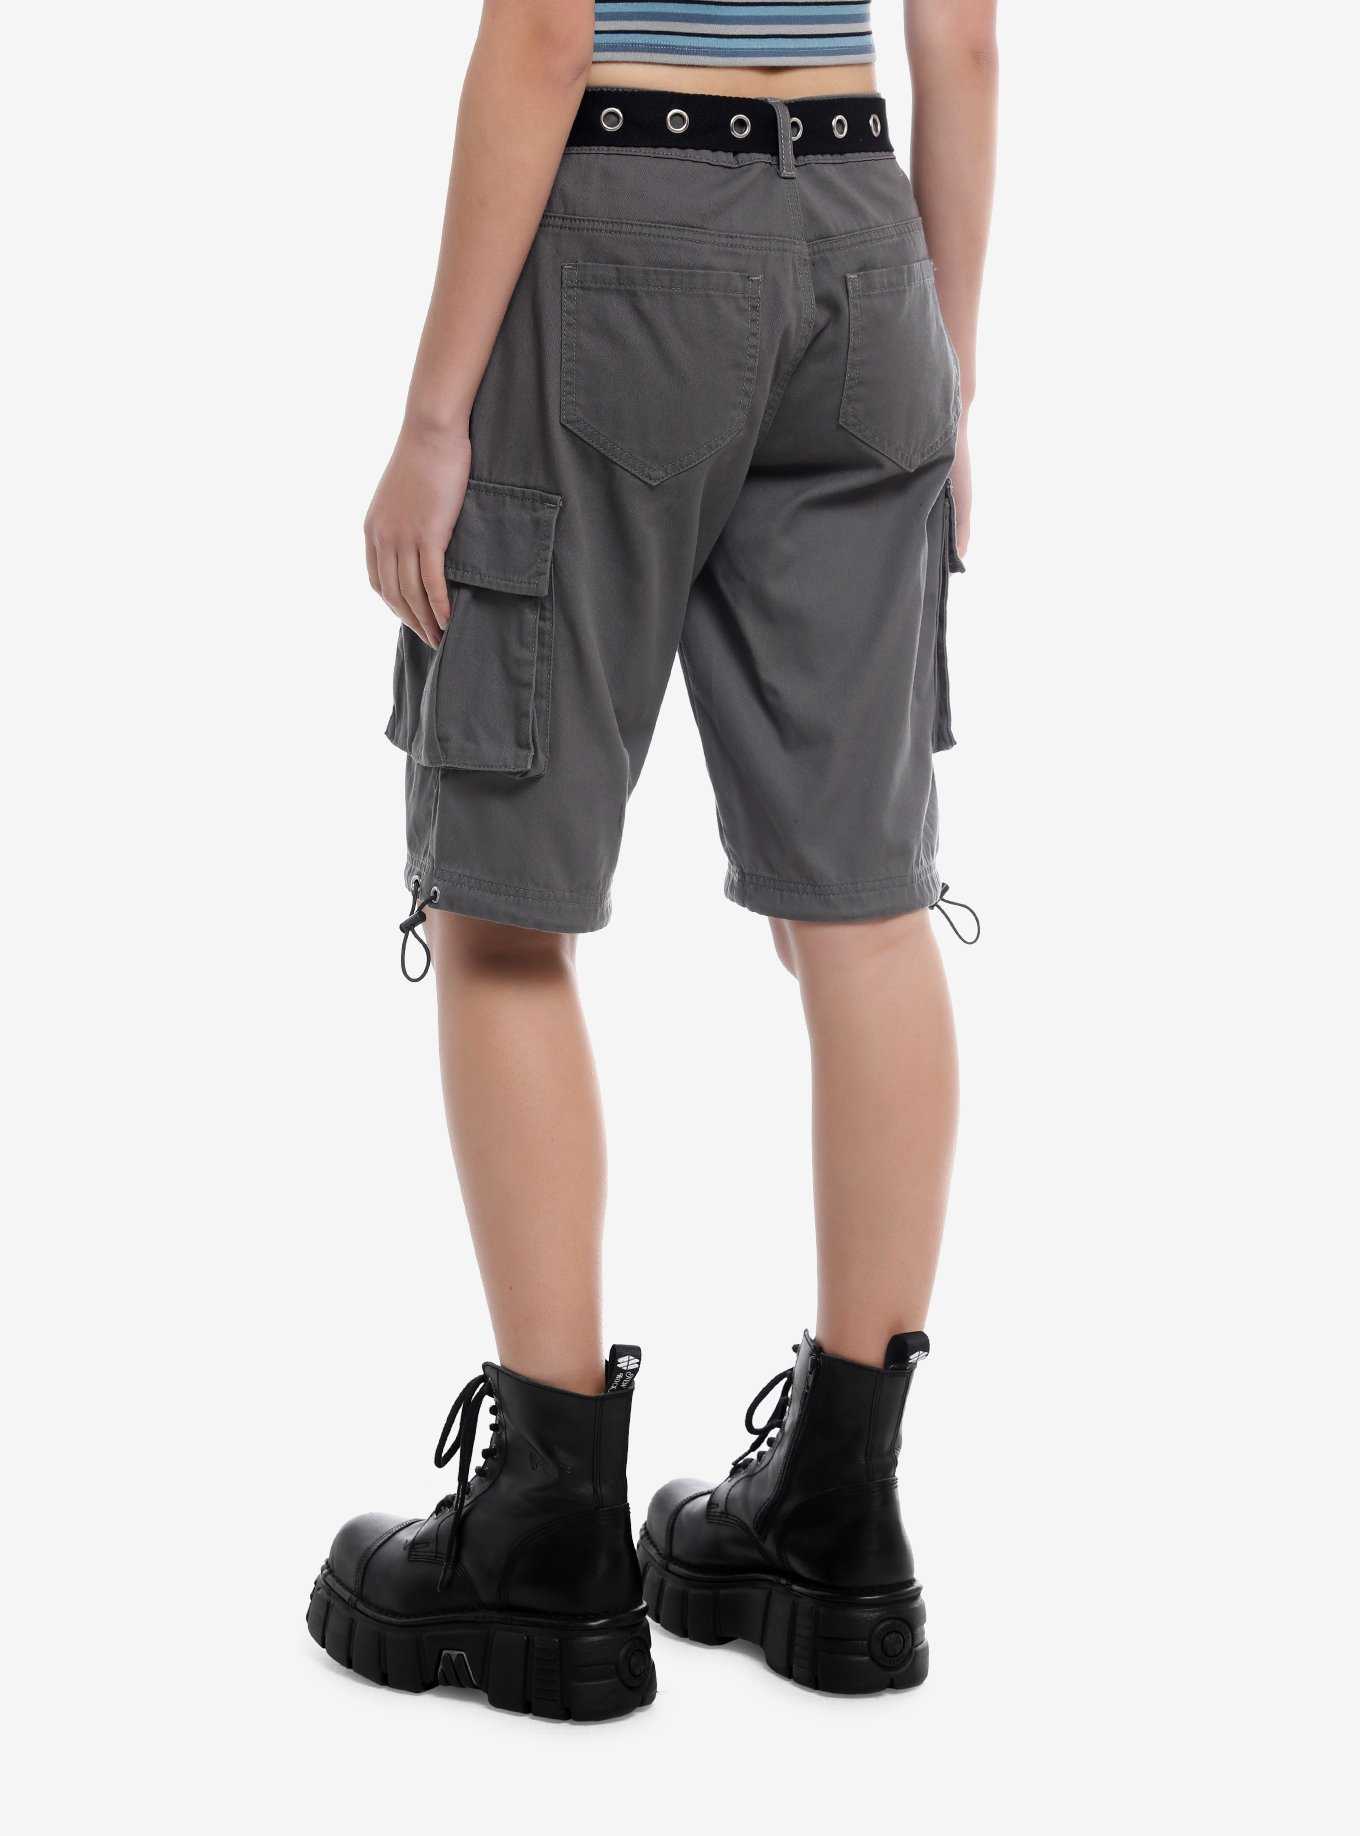 Grey Cargo Shorts With Grommet Belt, , hi-res